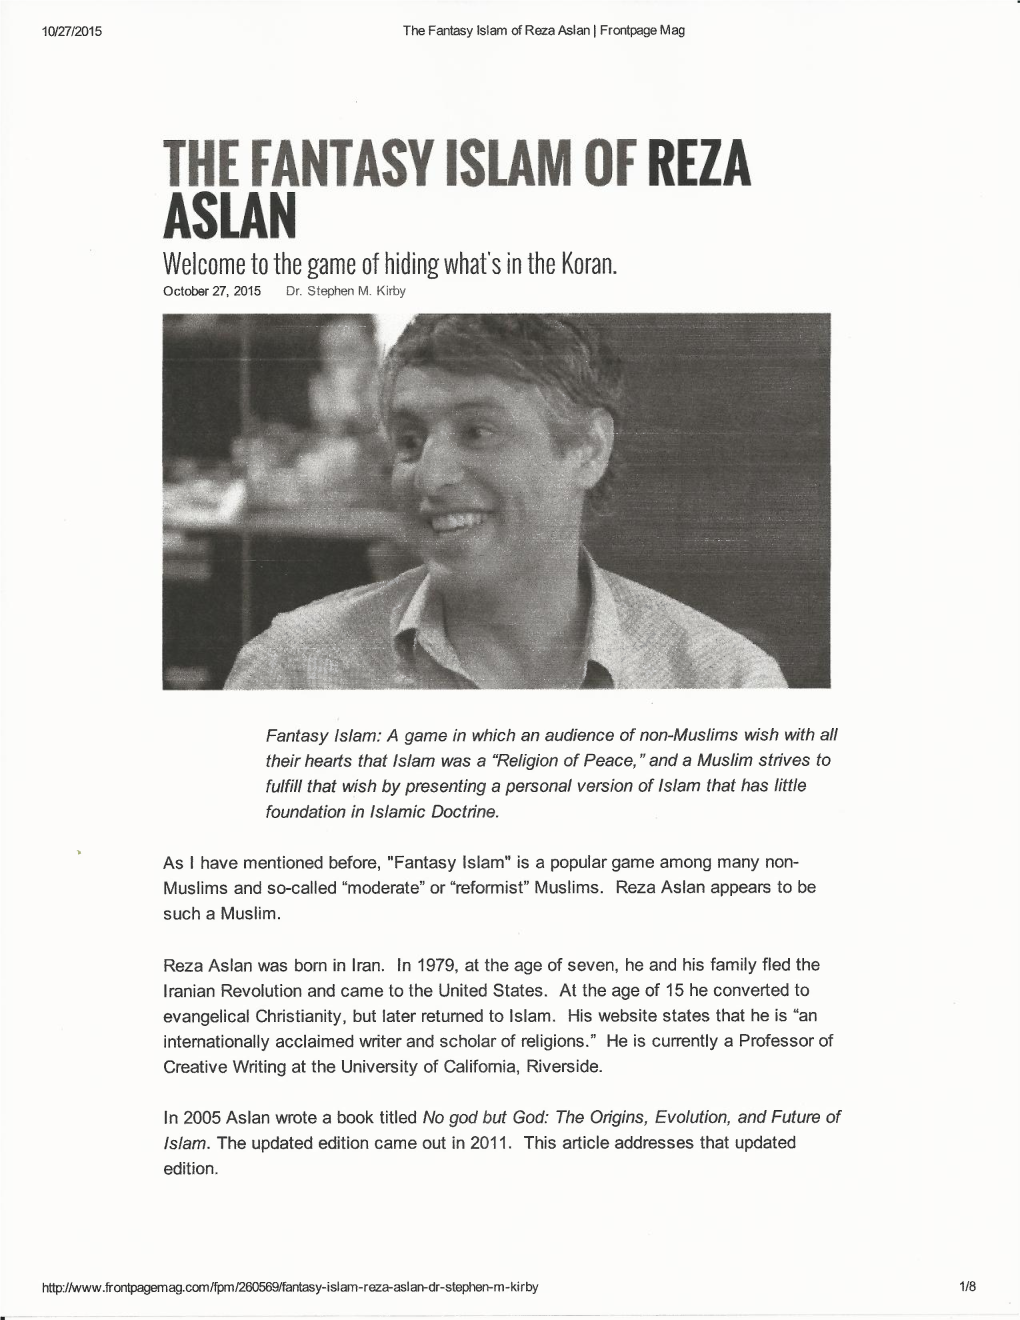 The Fantasy Islam of Reza Aslan